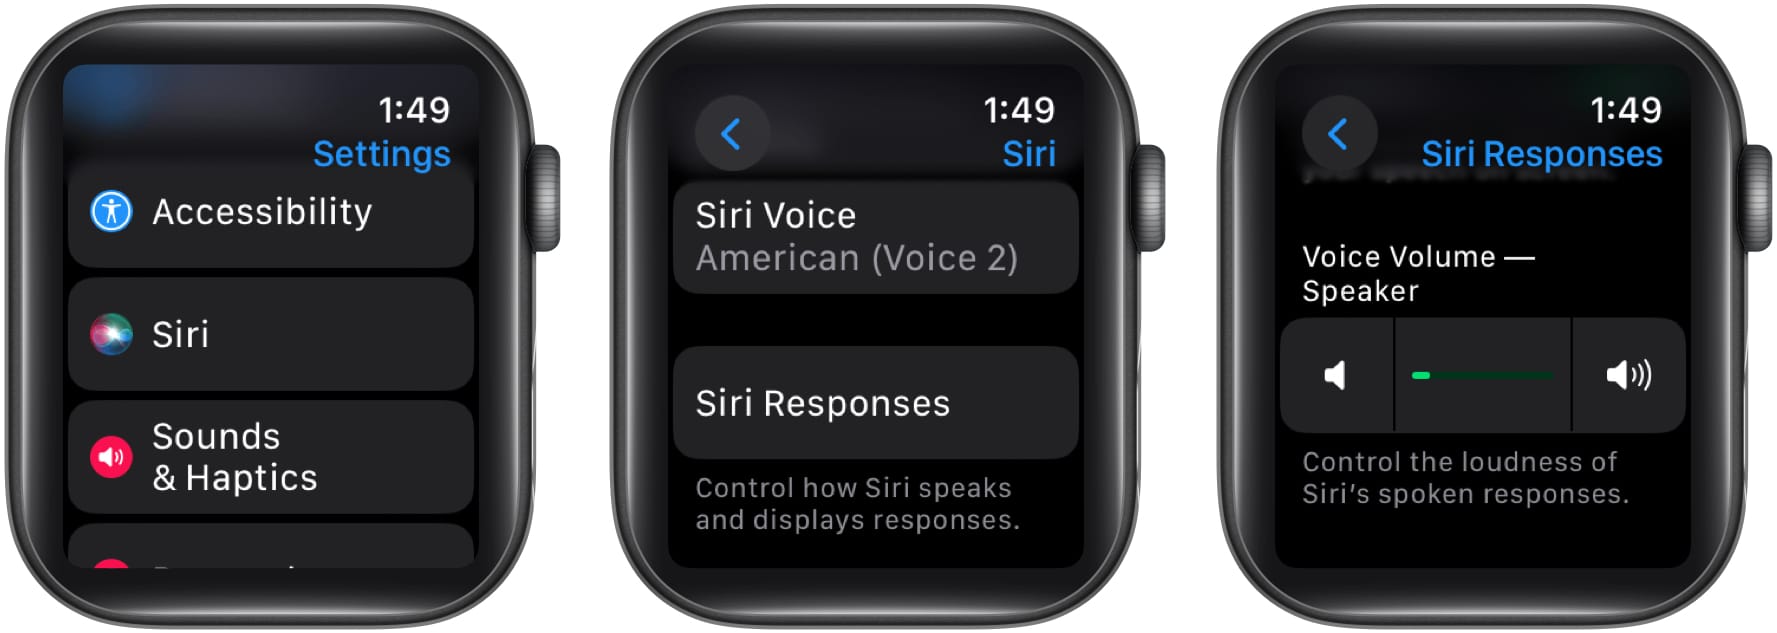 Go to Siri, Select Siri Responses and Adjust the Voice volume speaker